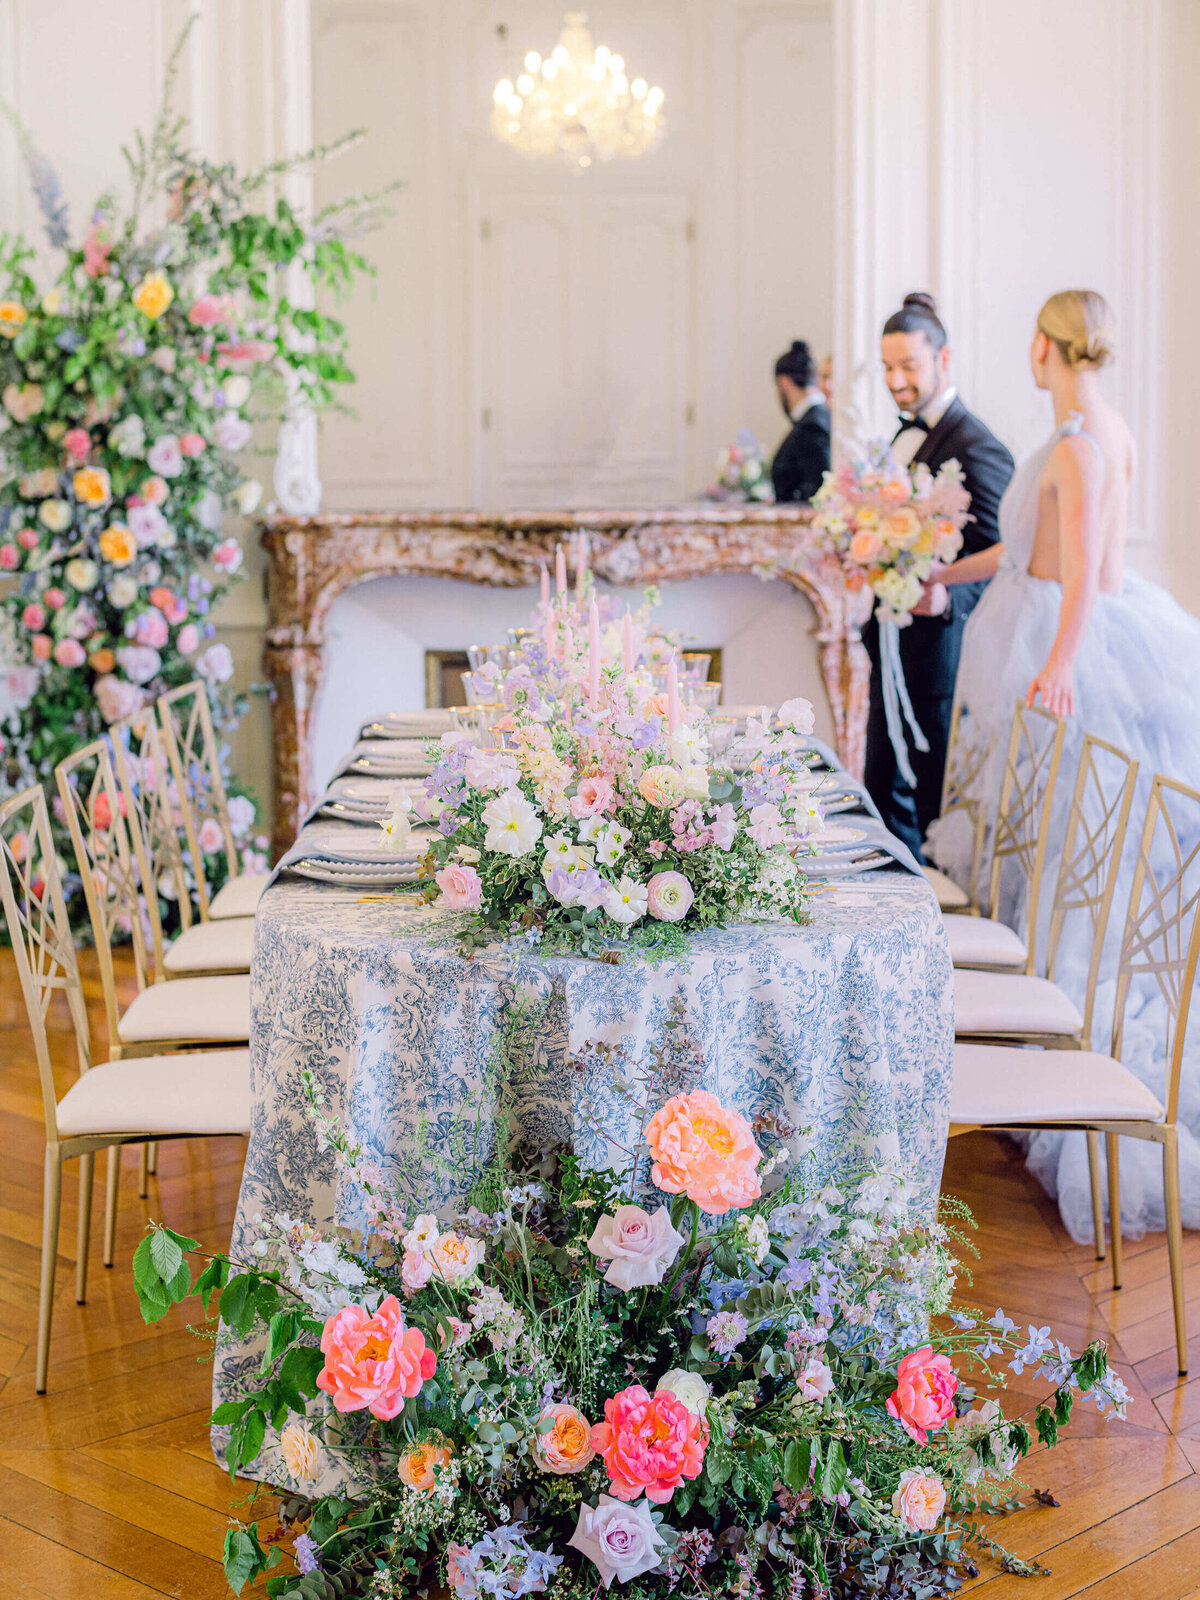 decoration-table-mariage-style-jardin